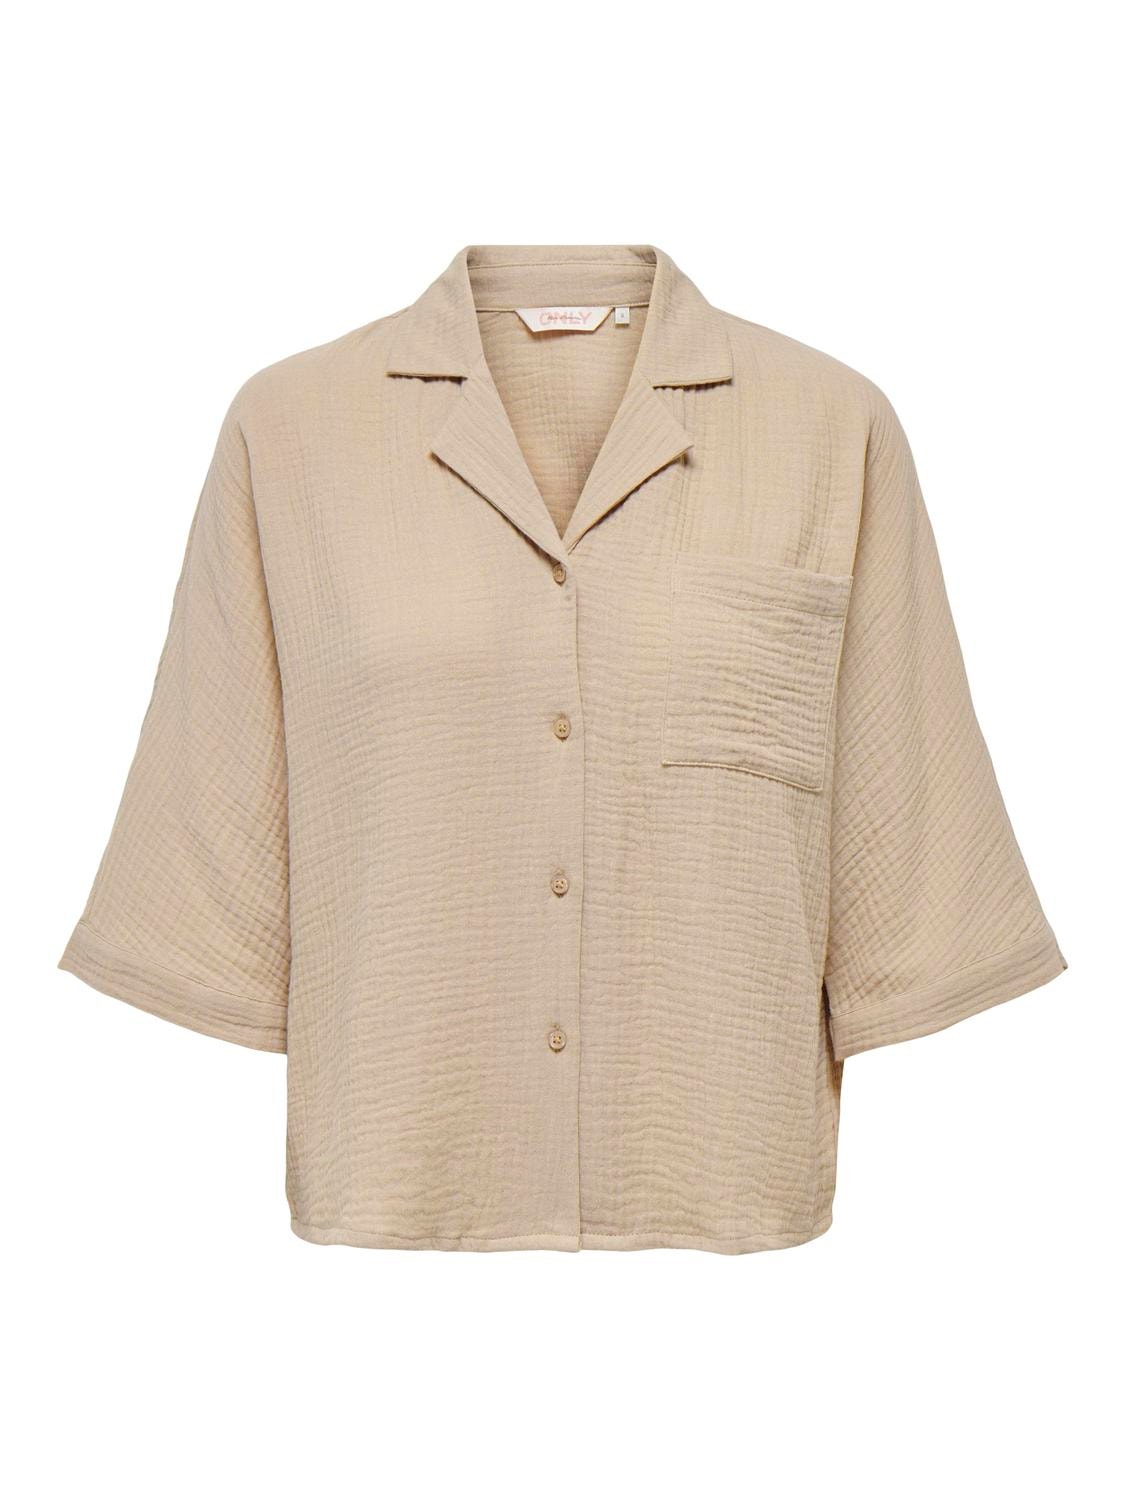 ONLY Camisas Corte regular Cuello abotonado -Oxford Tan - 15267839